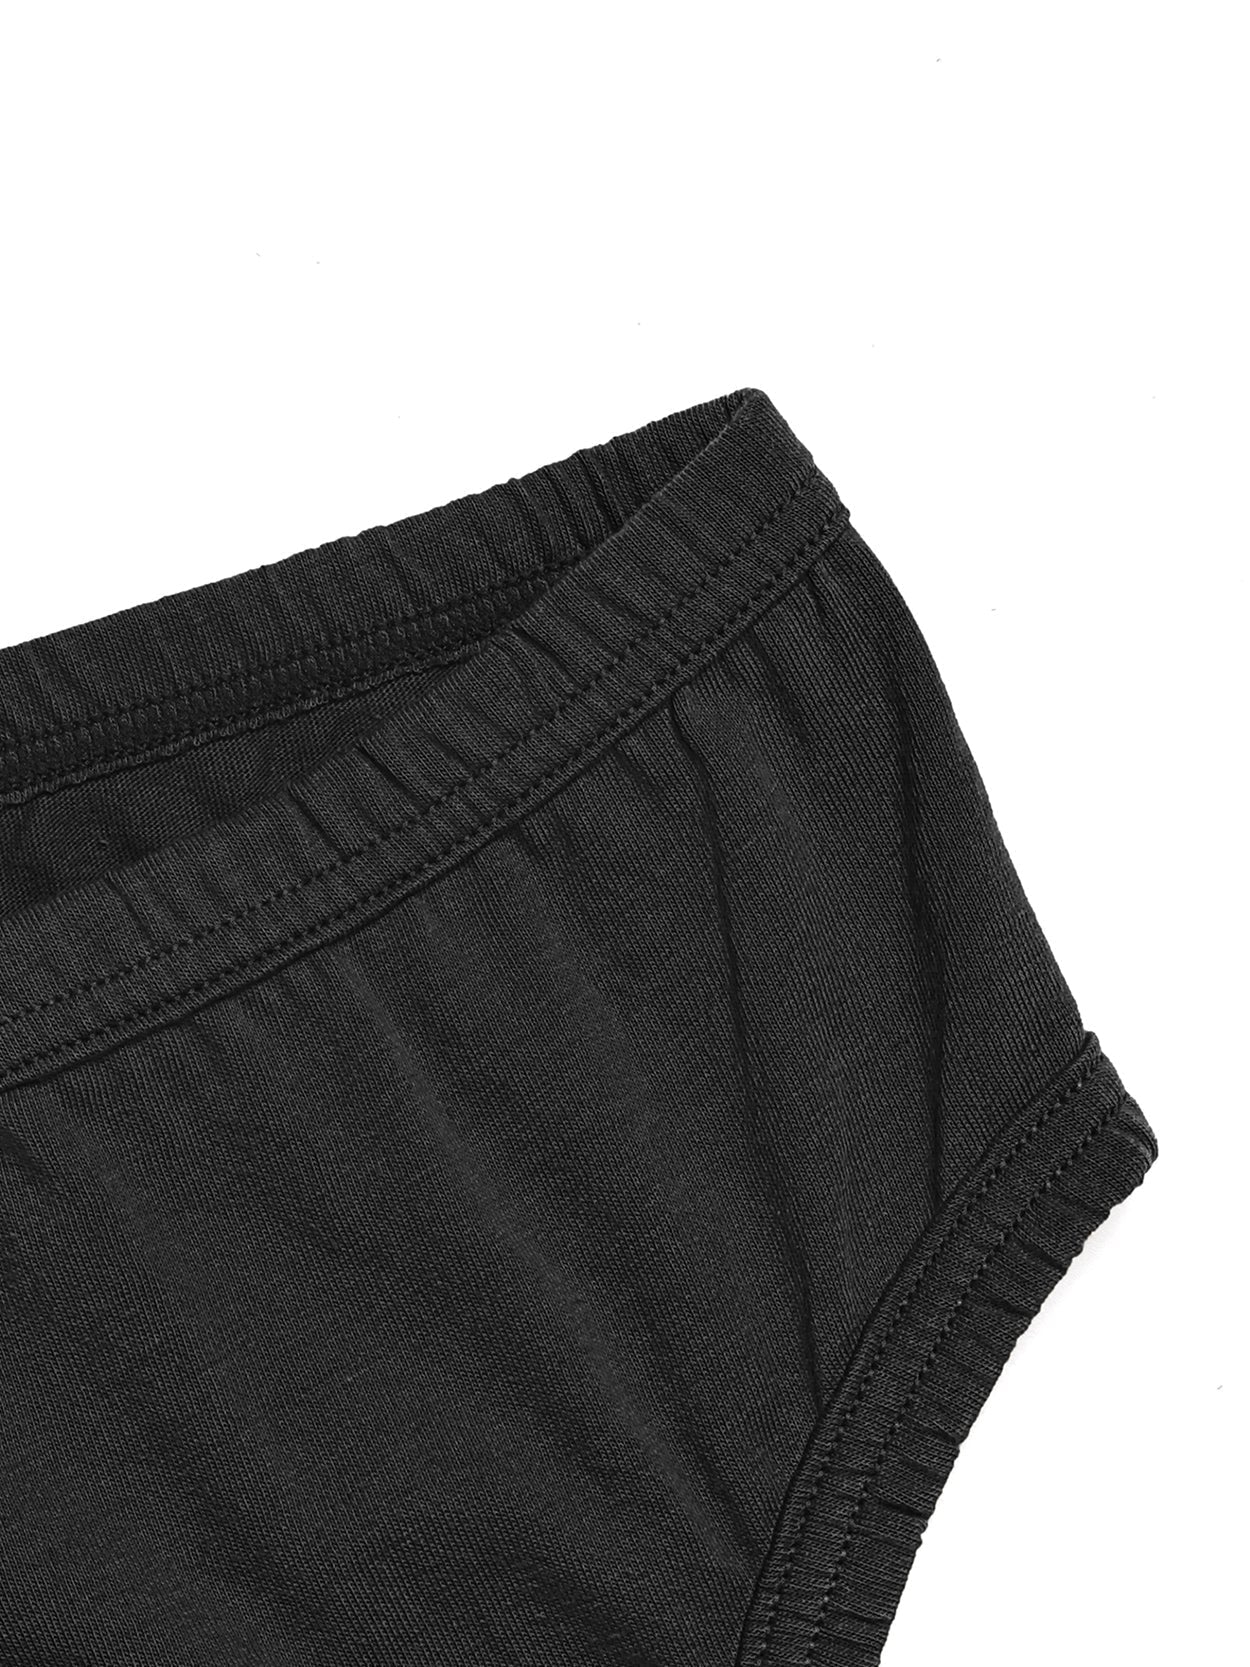 Comfort Soft Cotton Plus Size Underwear High-Cut Brief Panty 3 Pack ...